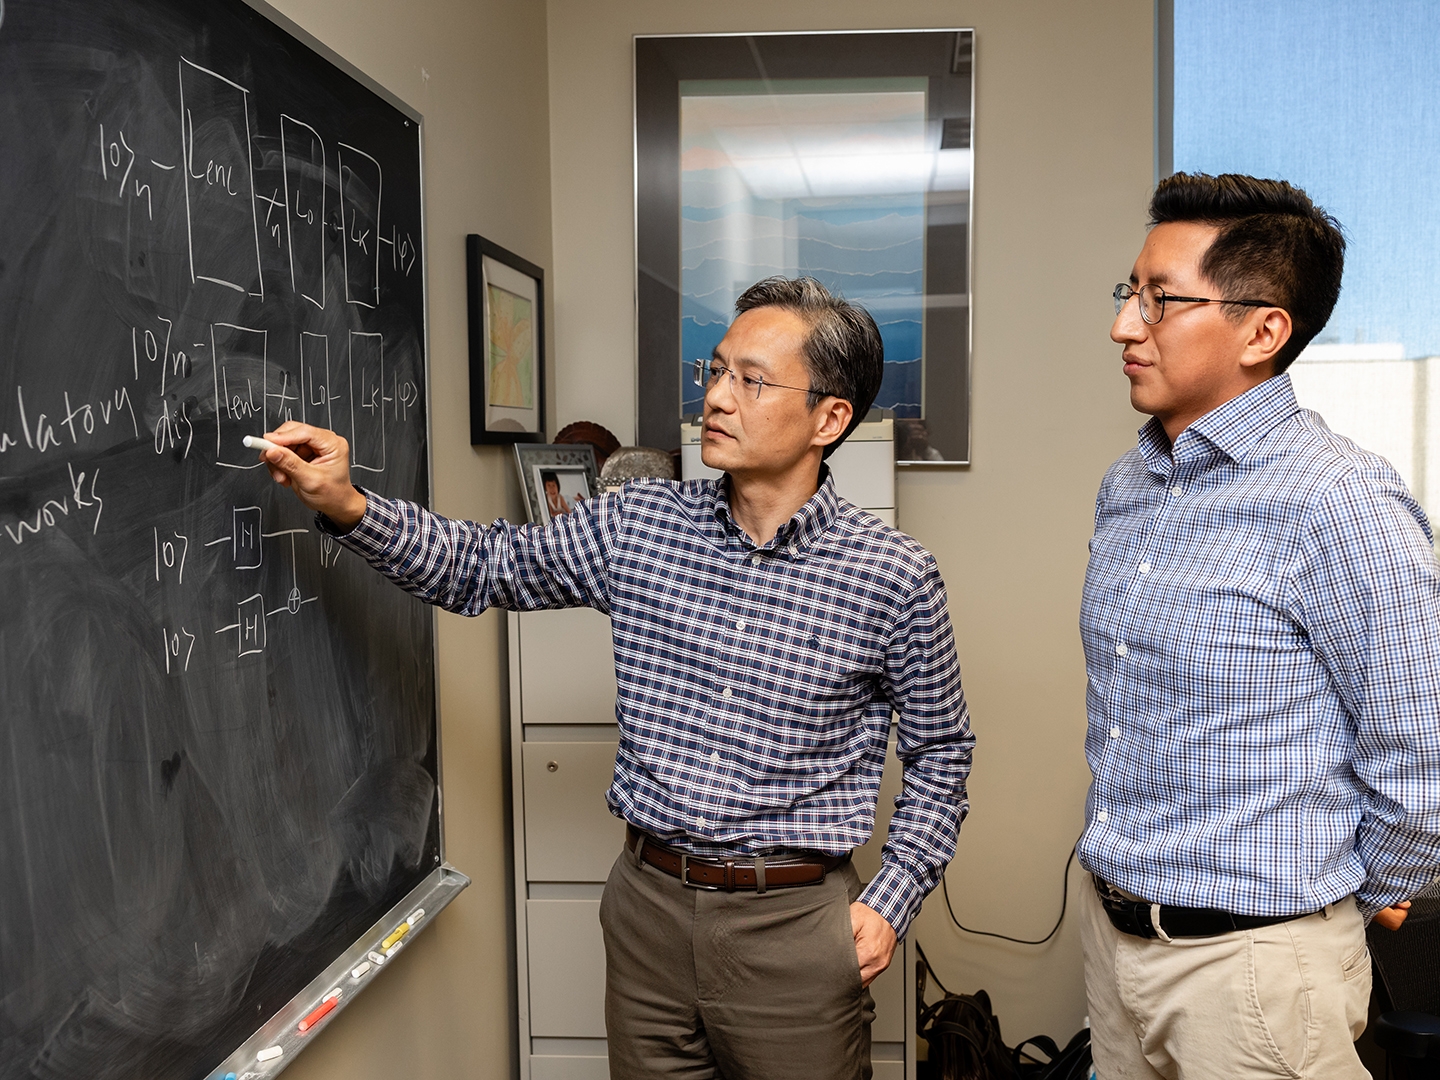 Dr. James Cai and Cristhian Roman Vicharra working on a chalkboard